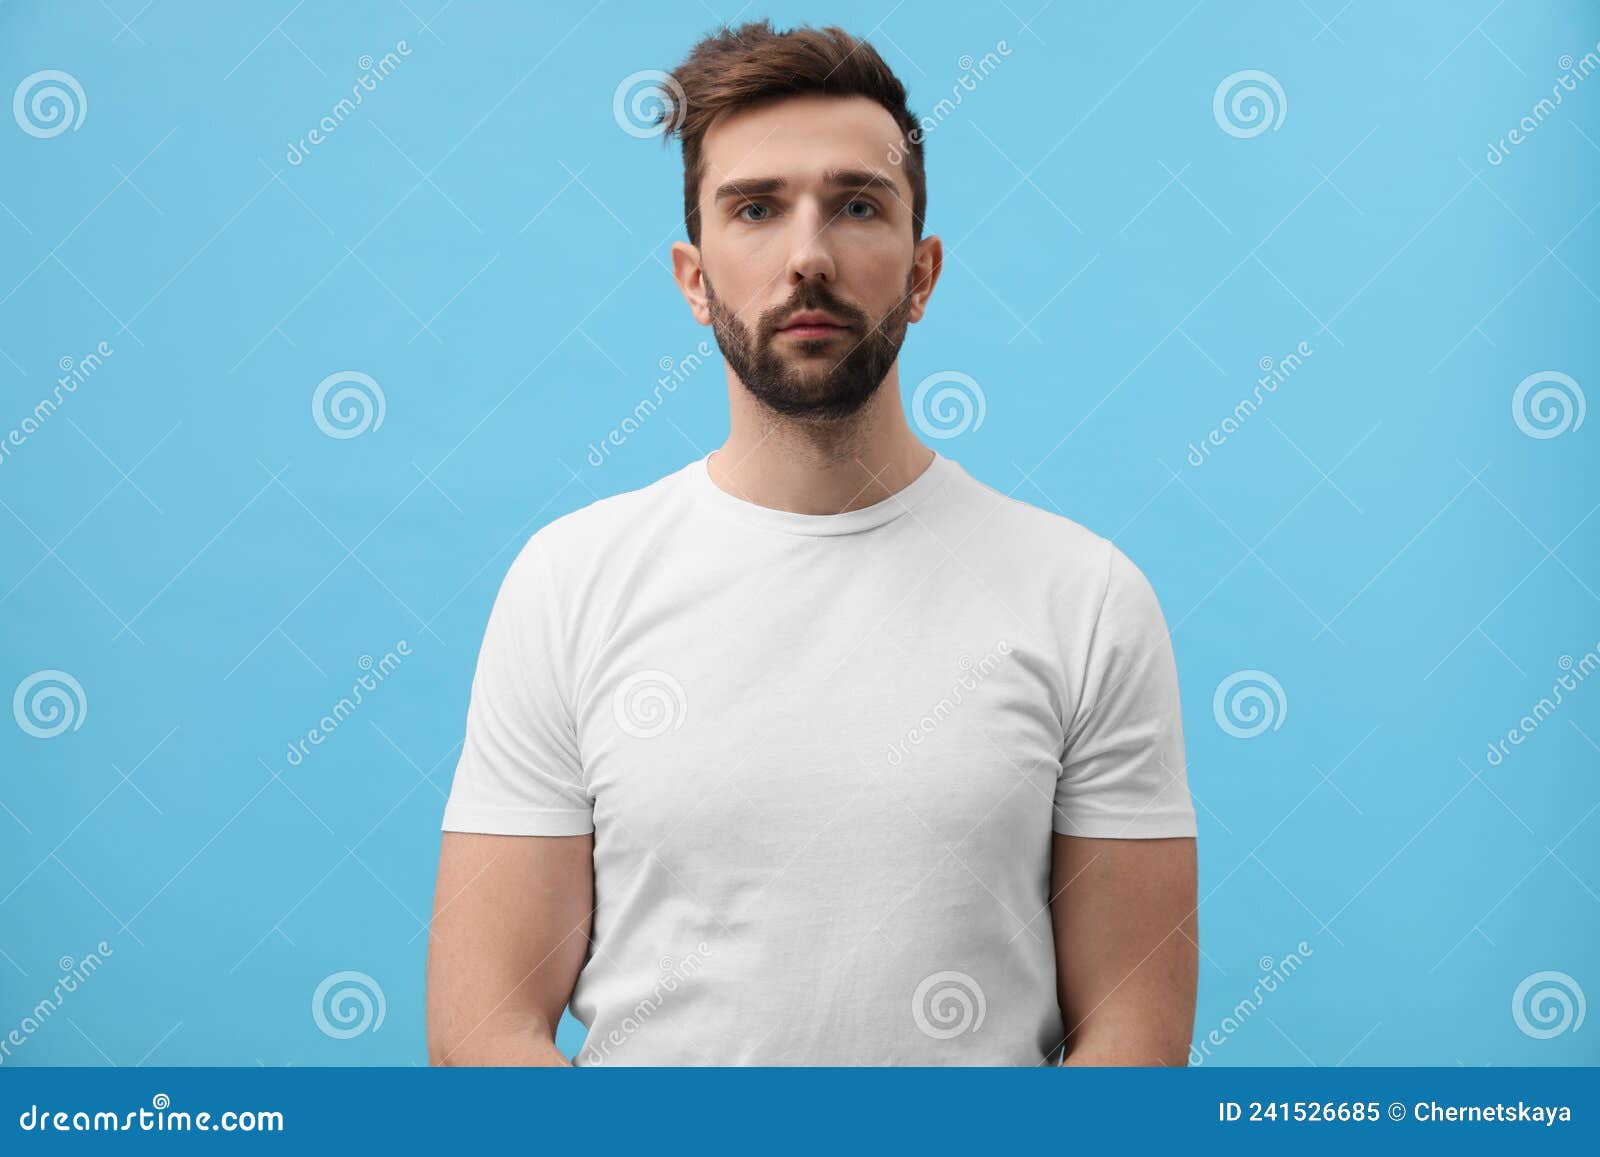 Portrait of Handsome Man on Light Blue Background Stock Image - Image ...